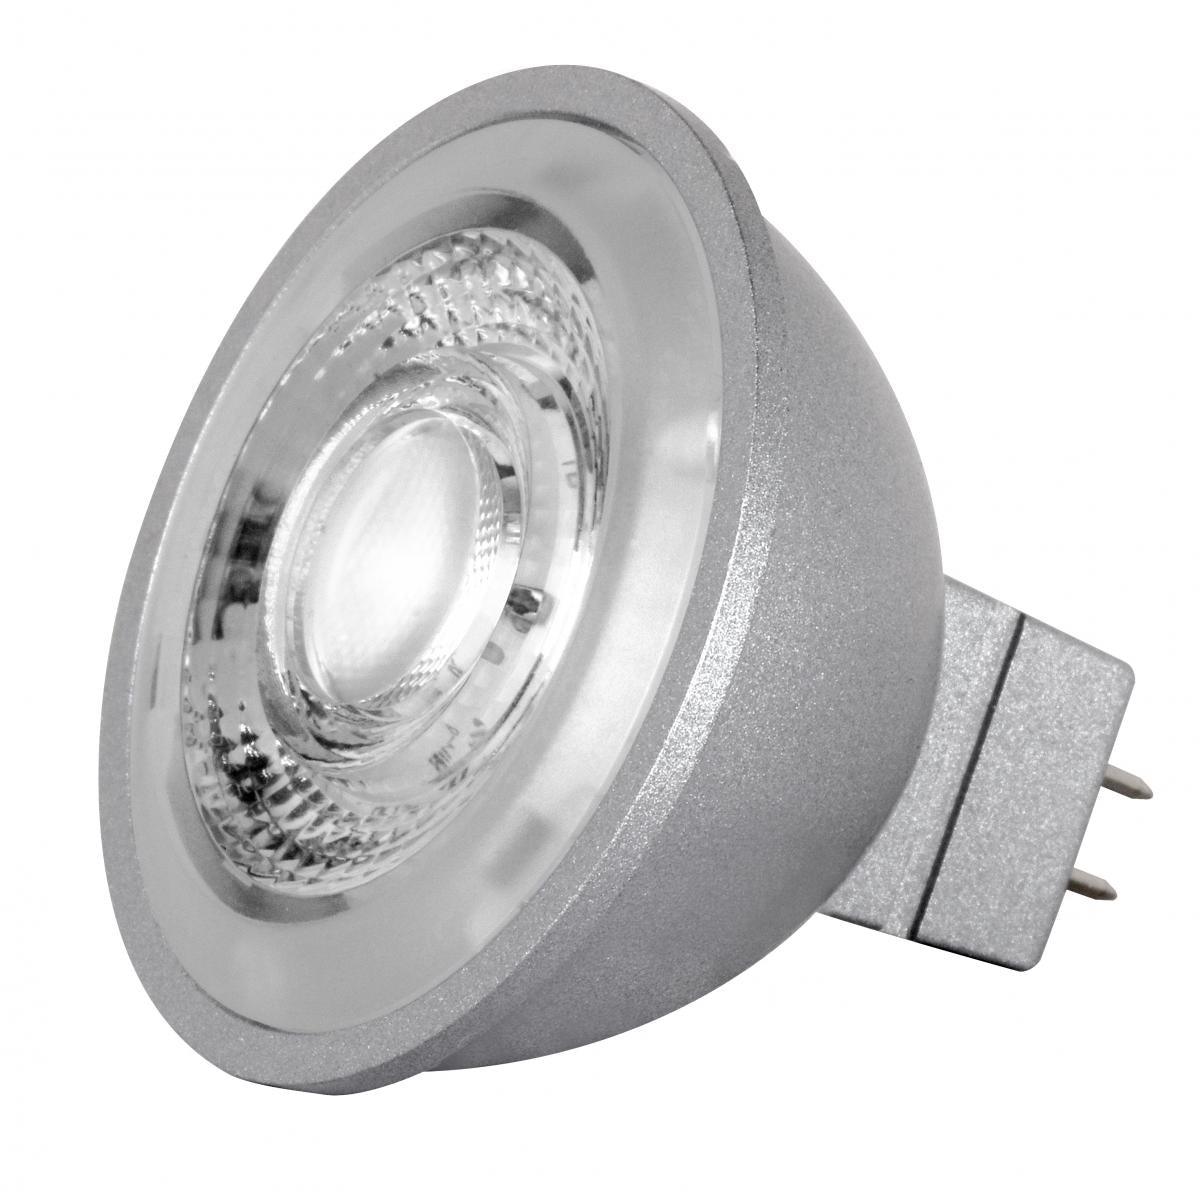 MR16 Reflector LED bulb, 8 watt, 490 Lumens, 3500K, GU5.3 Base, 40 Deg. Flood